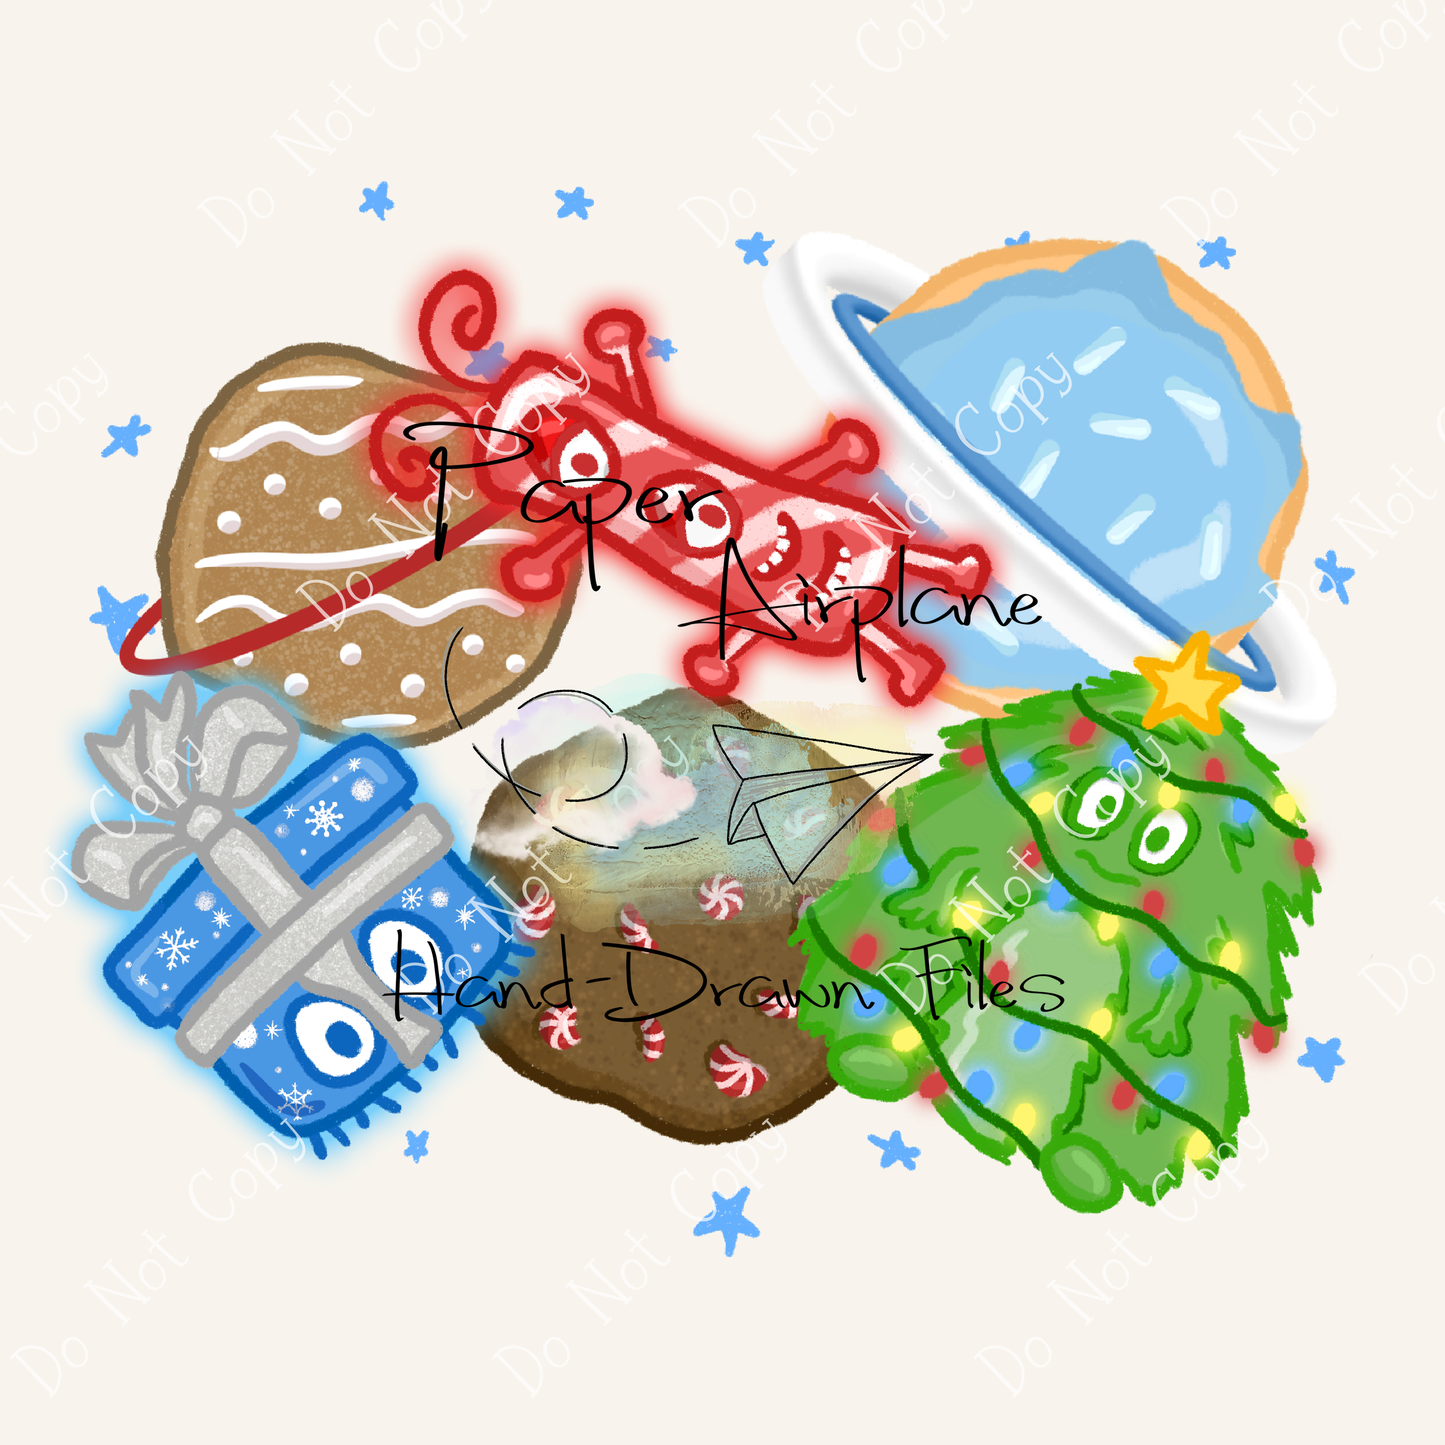 Monster Space Cookies (Christmas)